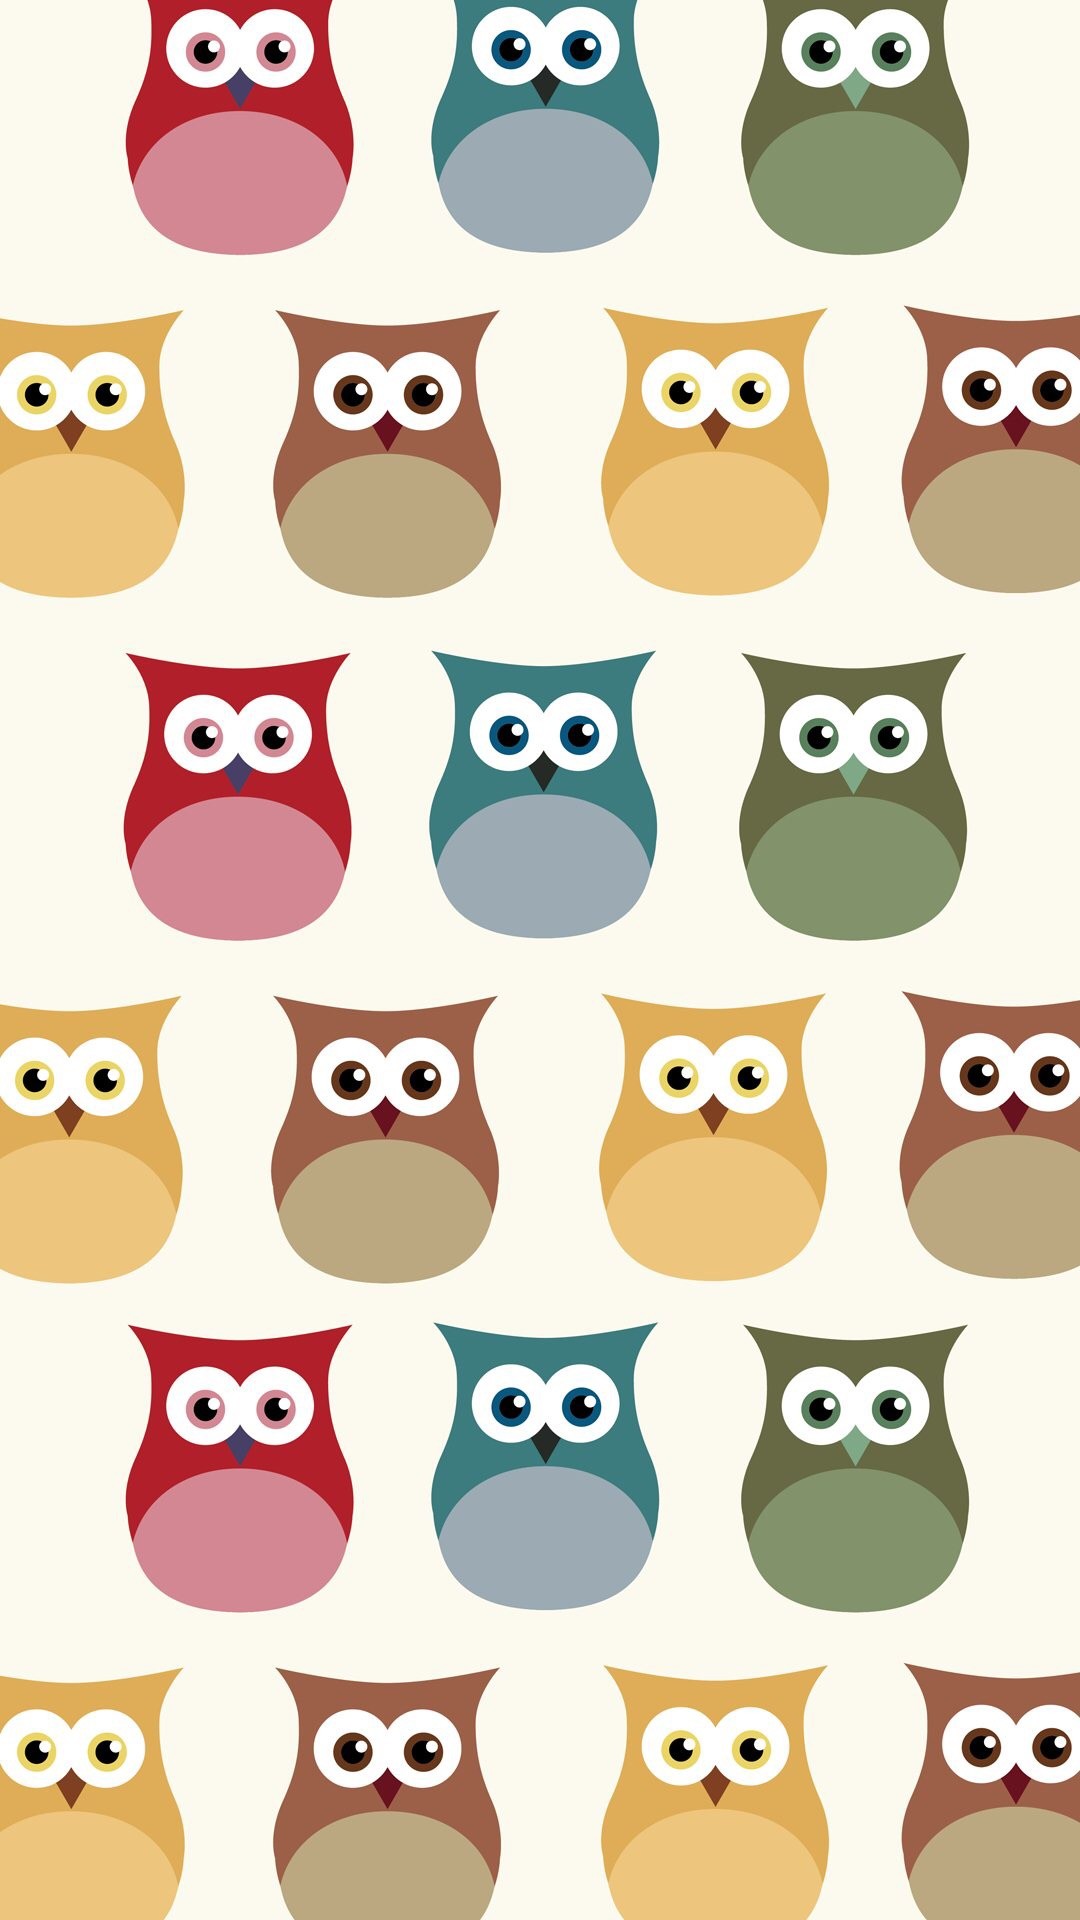 1080x1920 Owl Wallpaper, Kawaii Wallpaper, Latest Wallpaper, Backgrounds For Iphone, Wallpaper  Backgrounds, Iphone Wallpapers, Owl Animal, White Owls, Owl Patterns